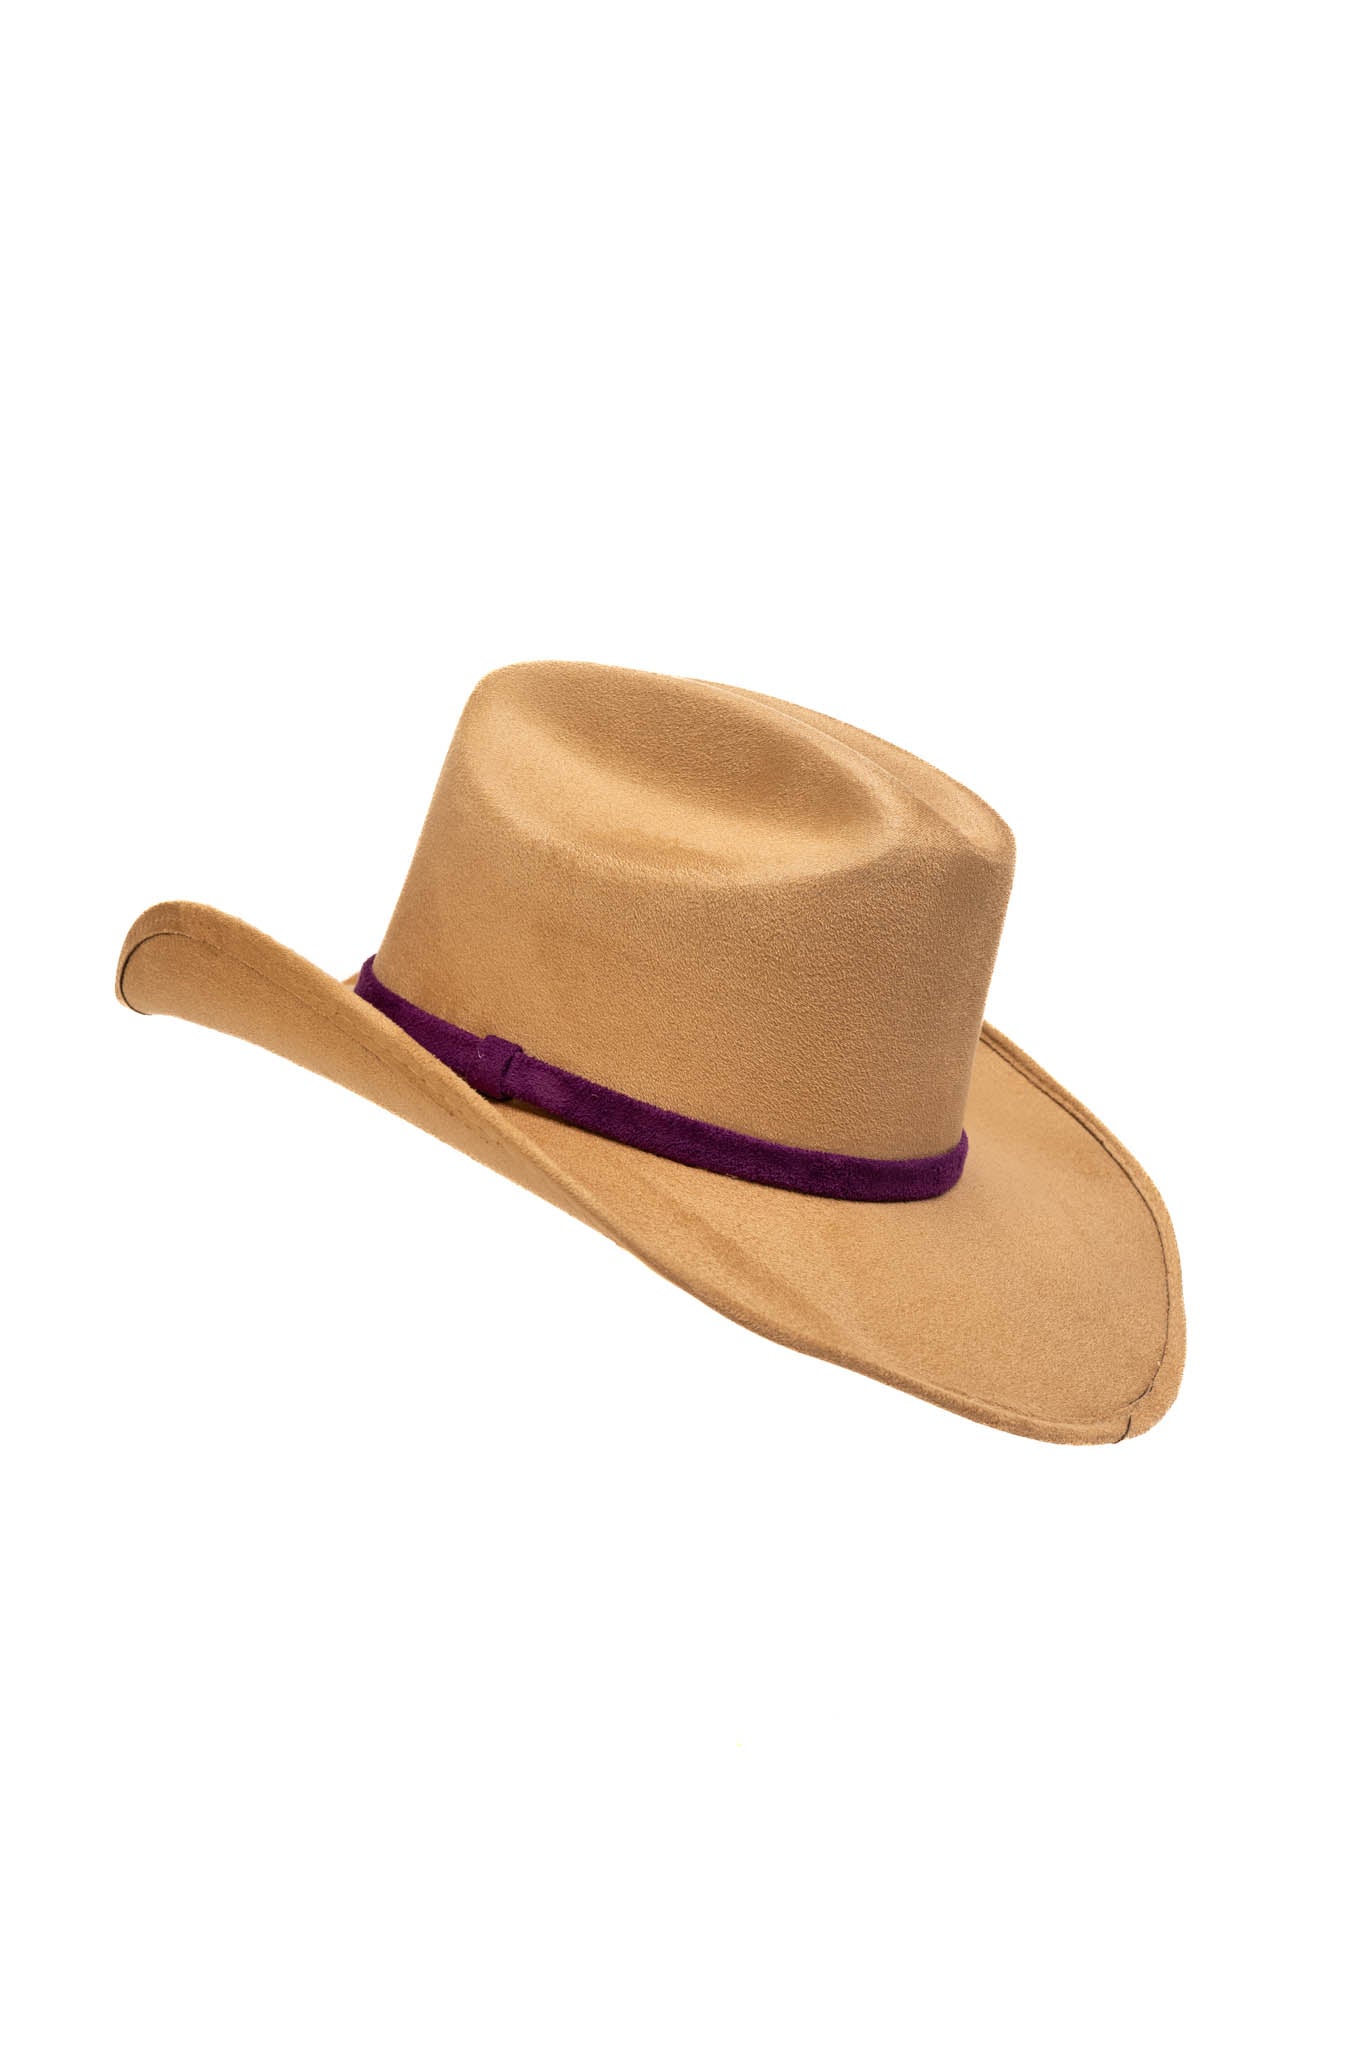 Little George Malboro Rainbow Toquilla Suede Cowgirl Hat